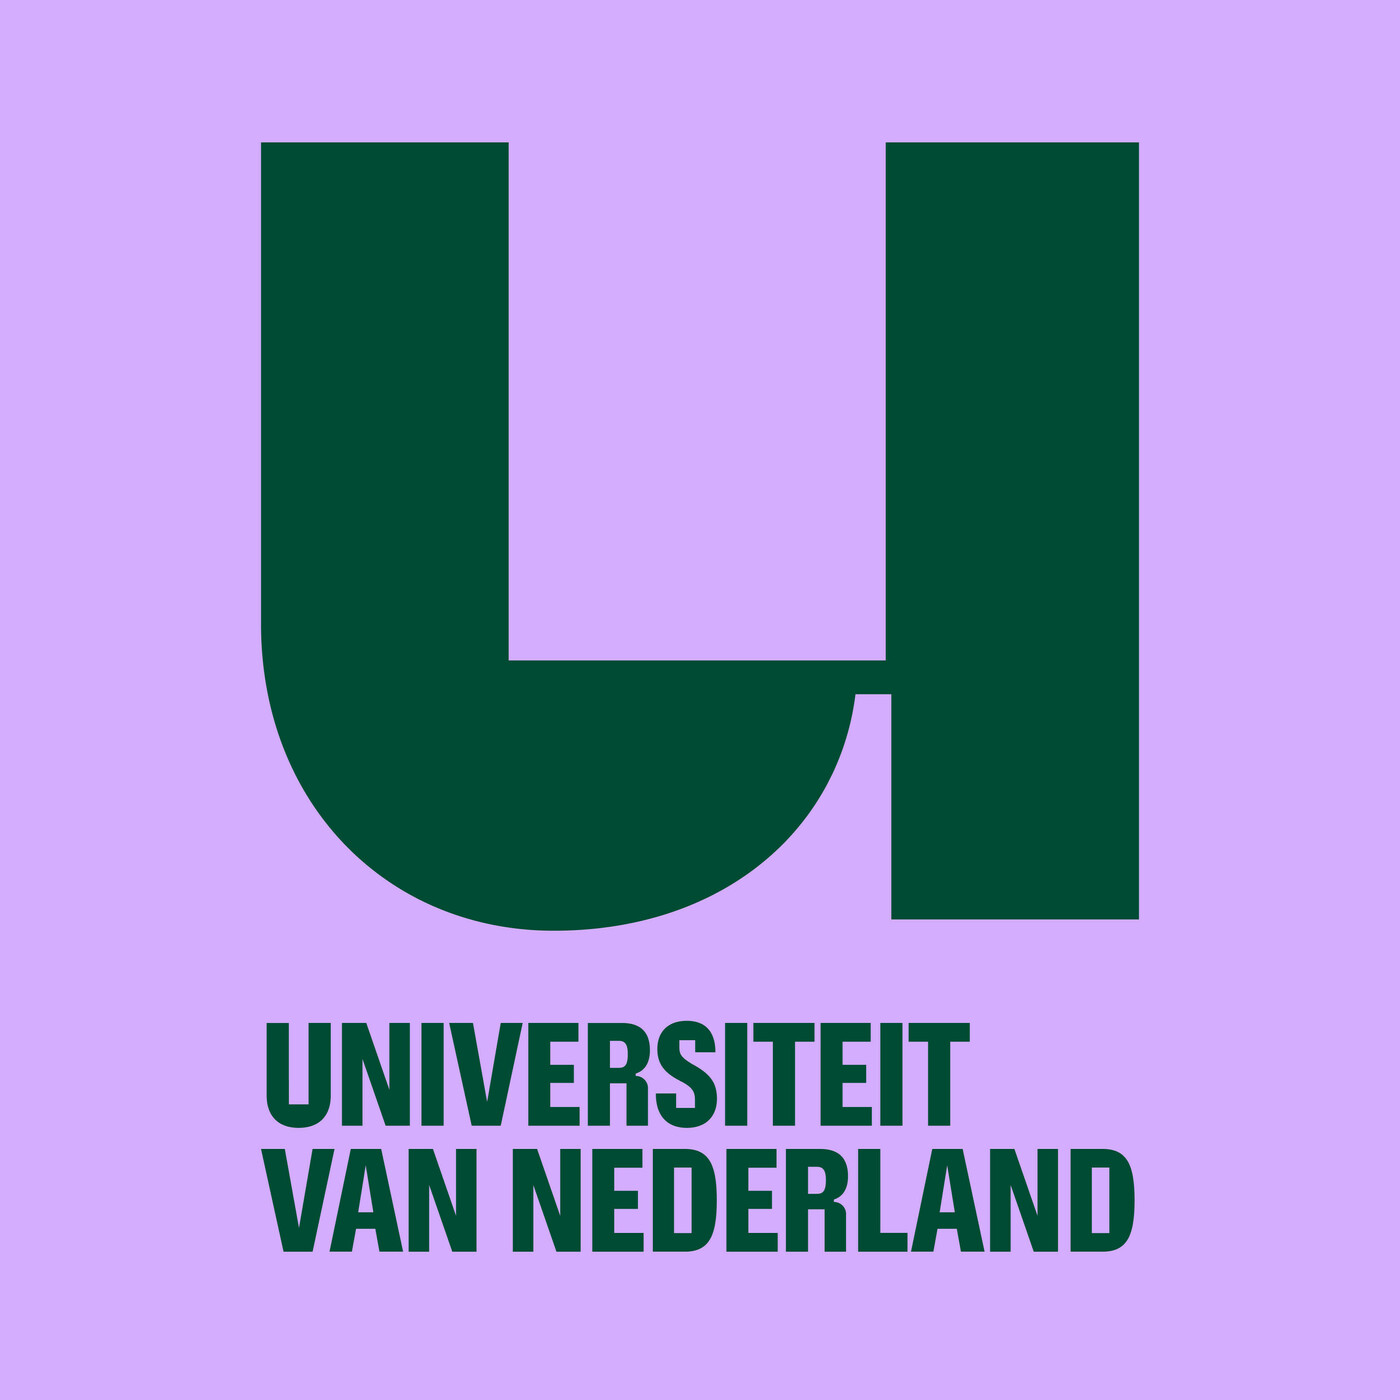 De Universiteit van Nederland Podcast podcast show image